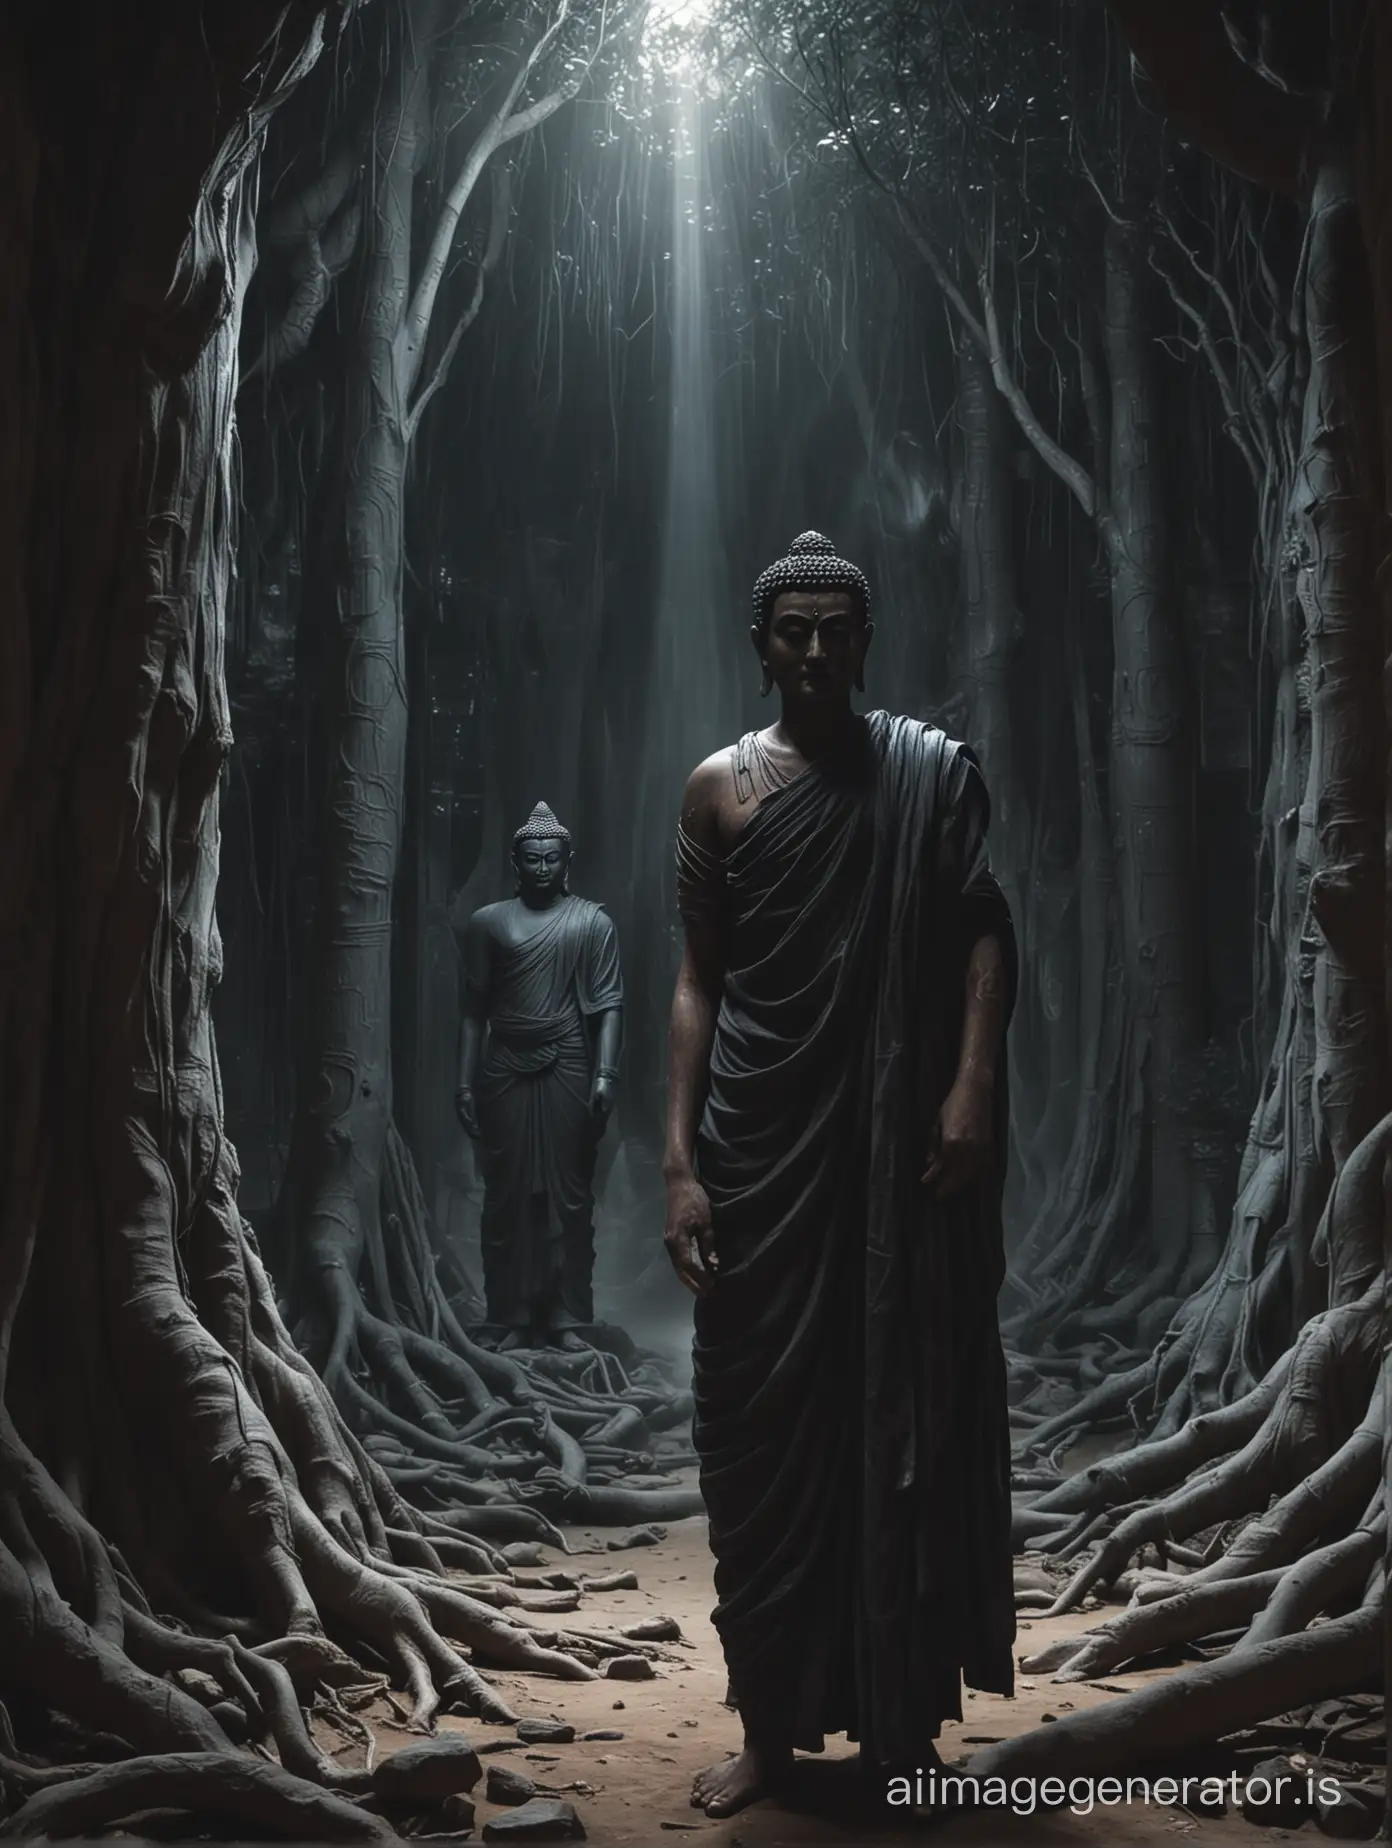 Mara, a shadowy figure lurking in the background, casting sinister glances towards Siddhartha.